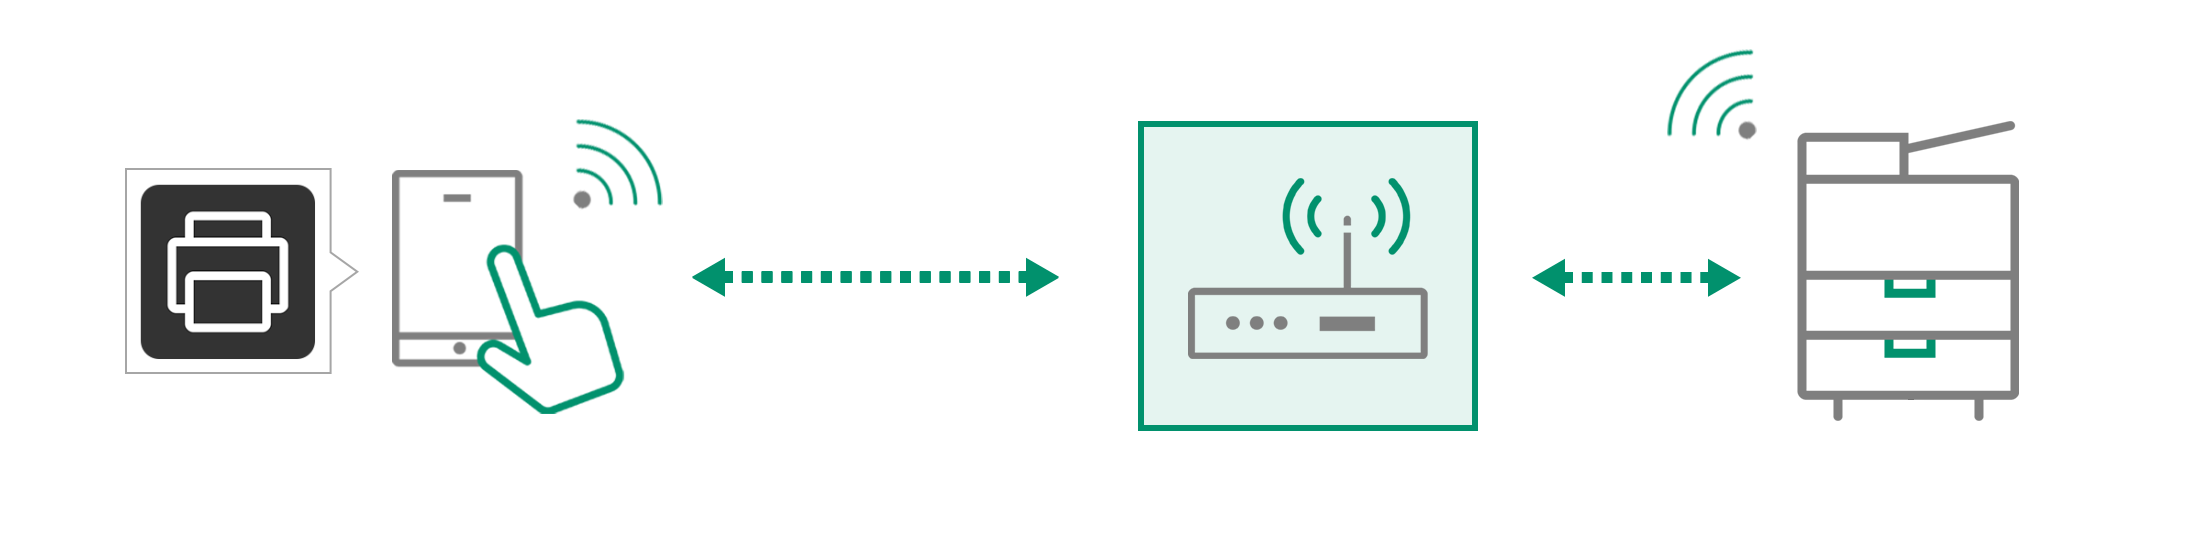 Wireless LAN Access Point Environment